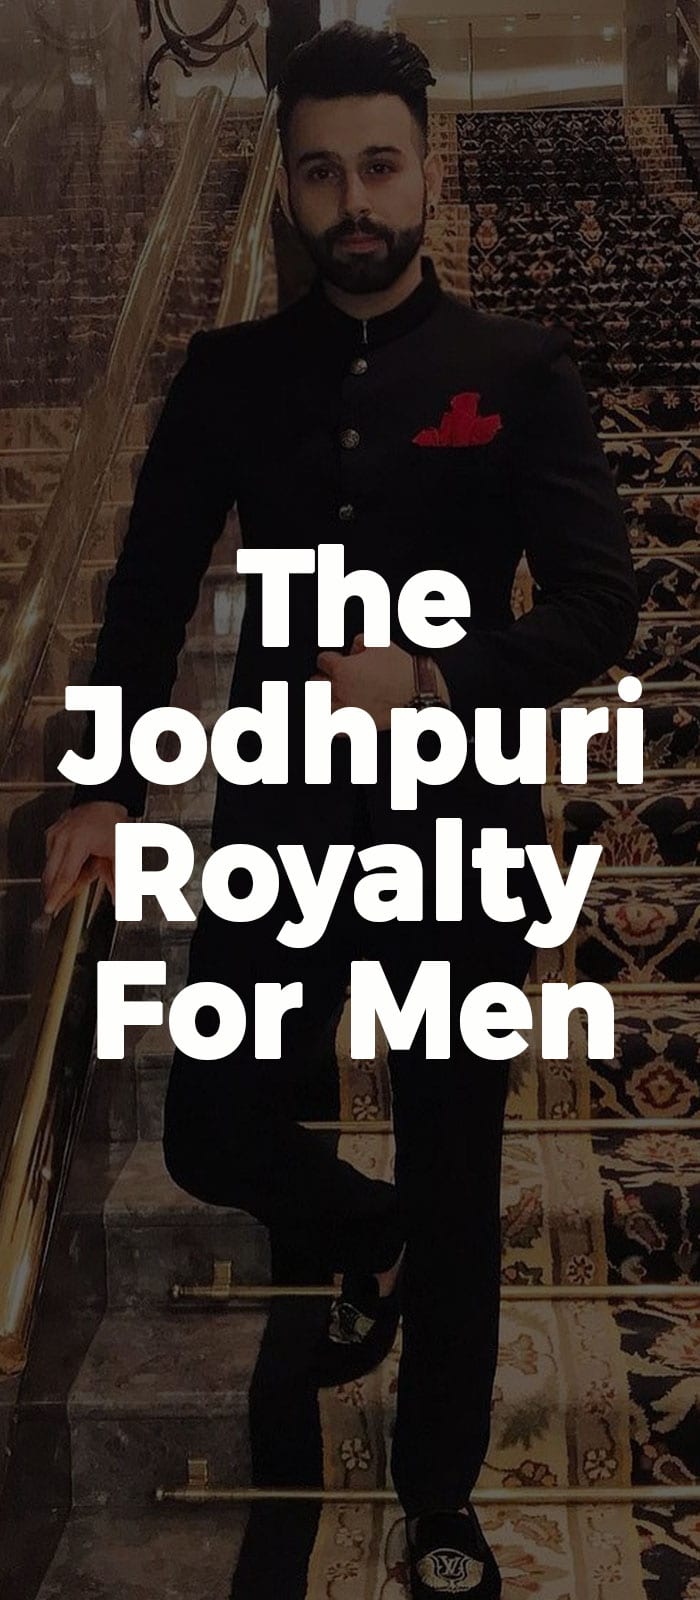 The Jodhpuri Royalty For Men